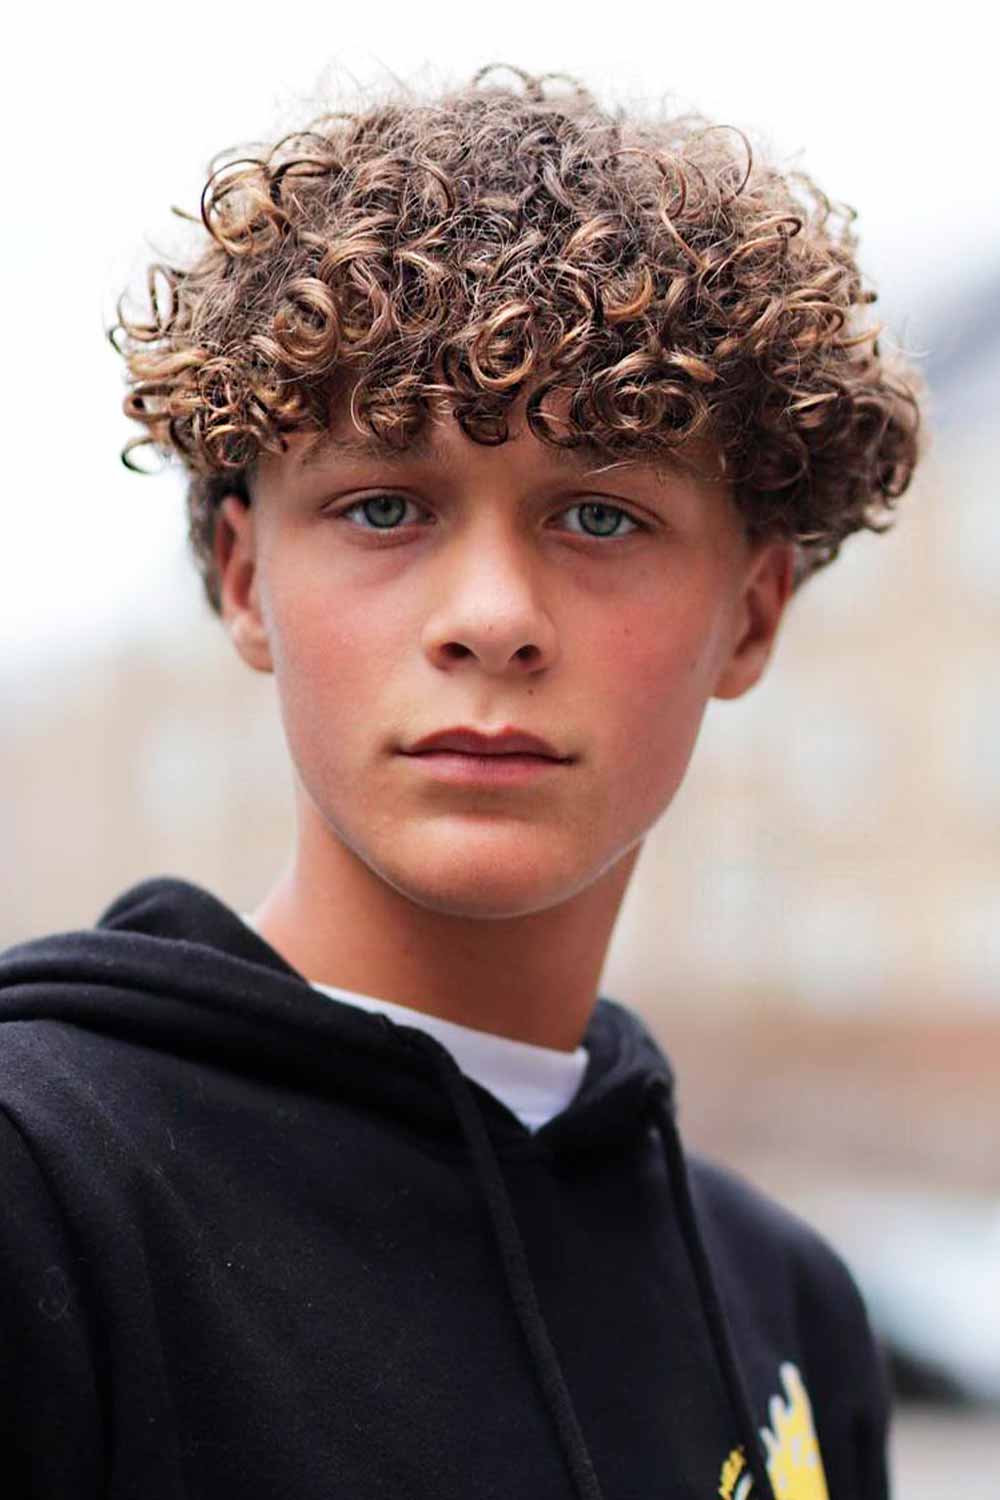 Bowl Cut Curly Hairstyles For Men #curlyhairmen #curlyhairstylesformen #menwithcurlyhair